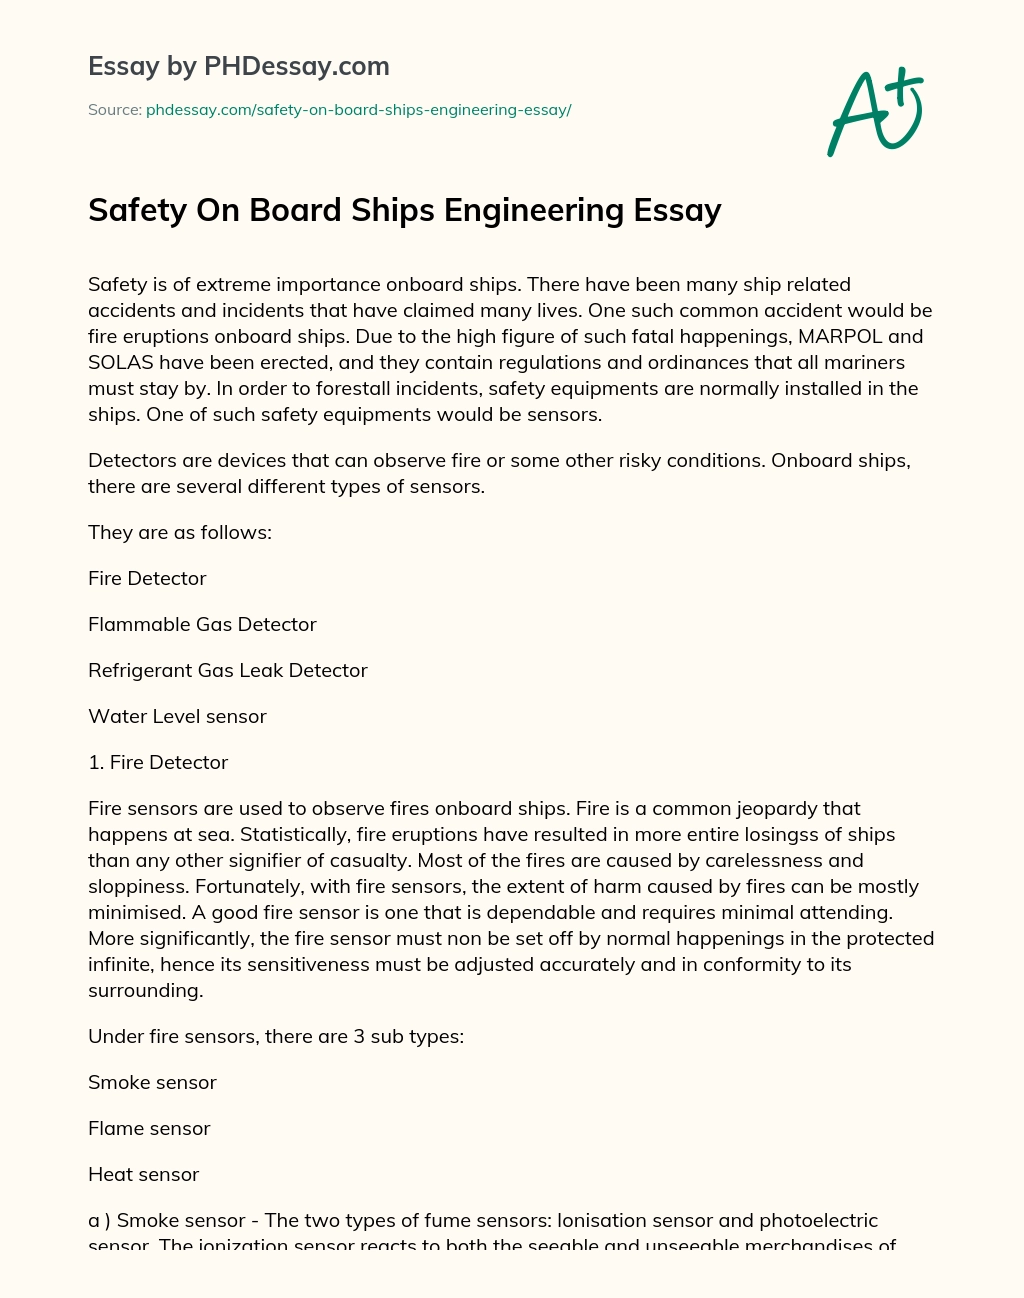 Safety On Board Ships Engineering Essay essay